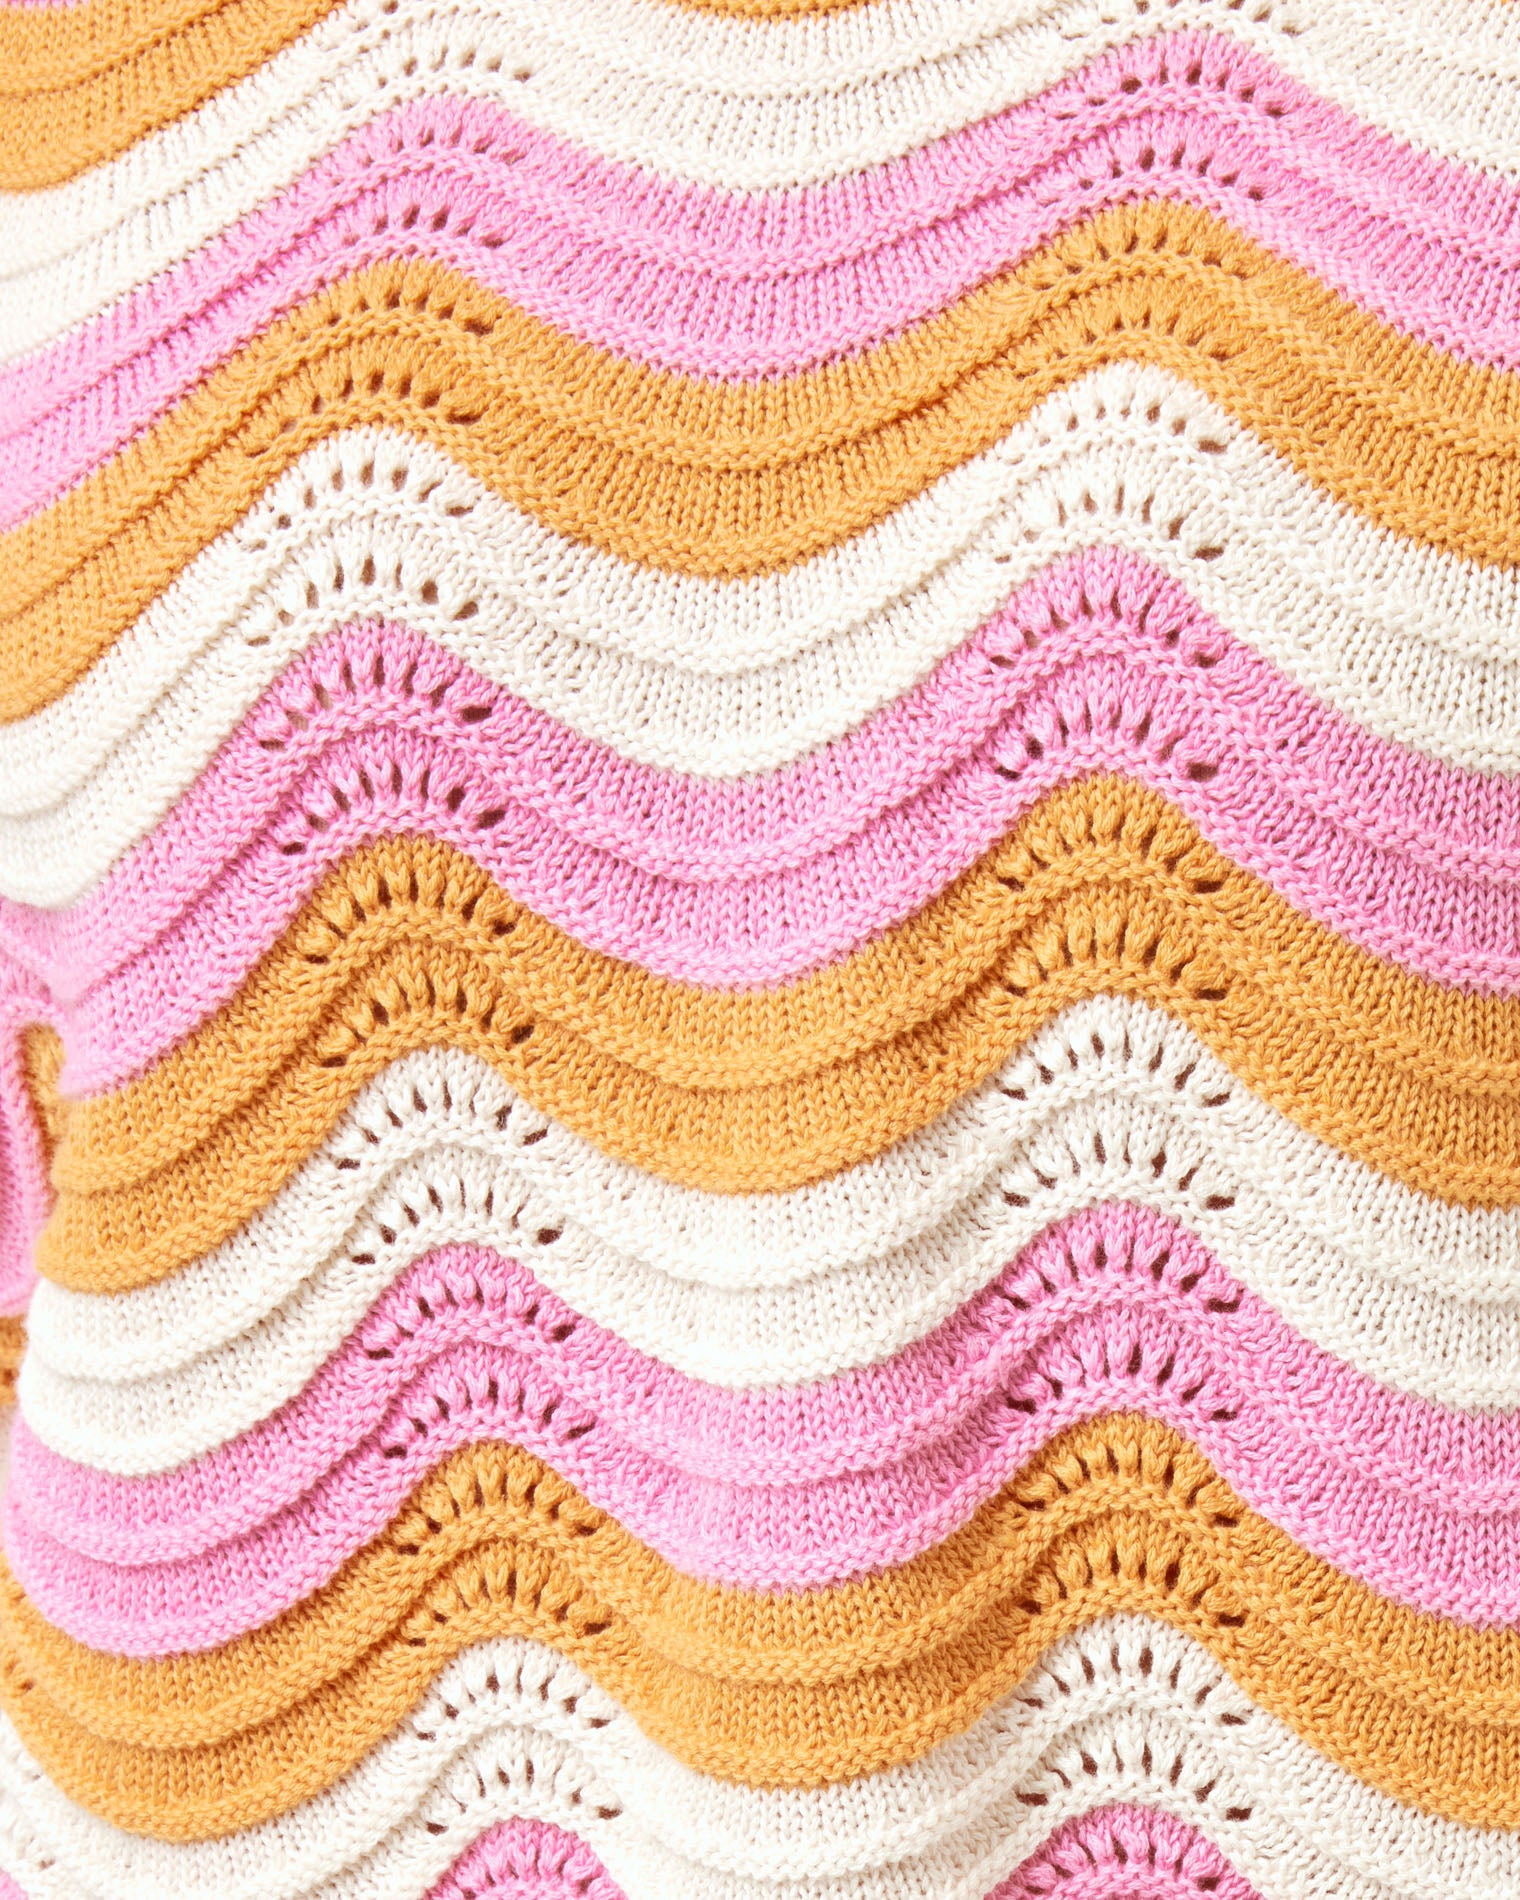 Make Waves Sweater - Catching Sun Catching Sun | Model: Lura (size: S)